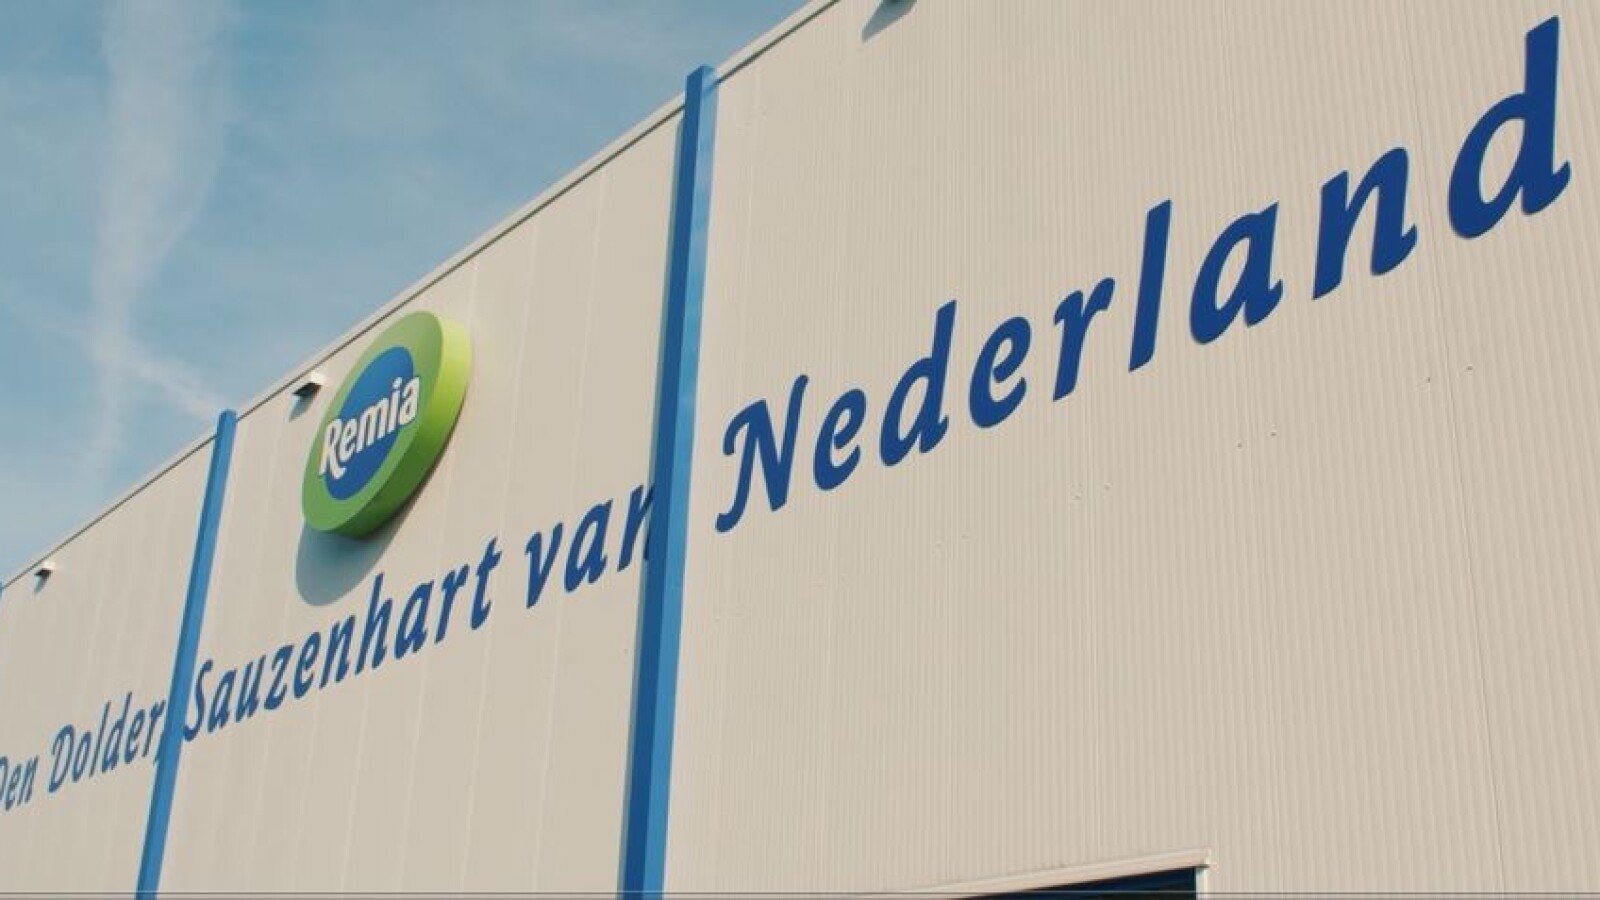 Remia fabriek Sauzenhart van Nederland